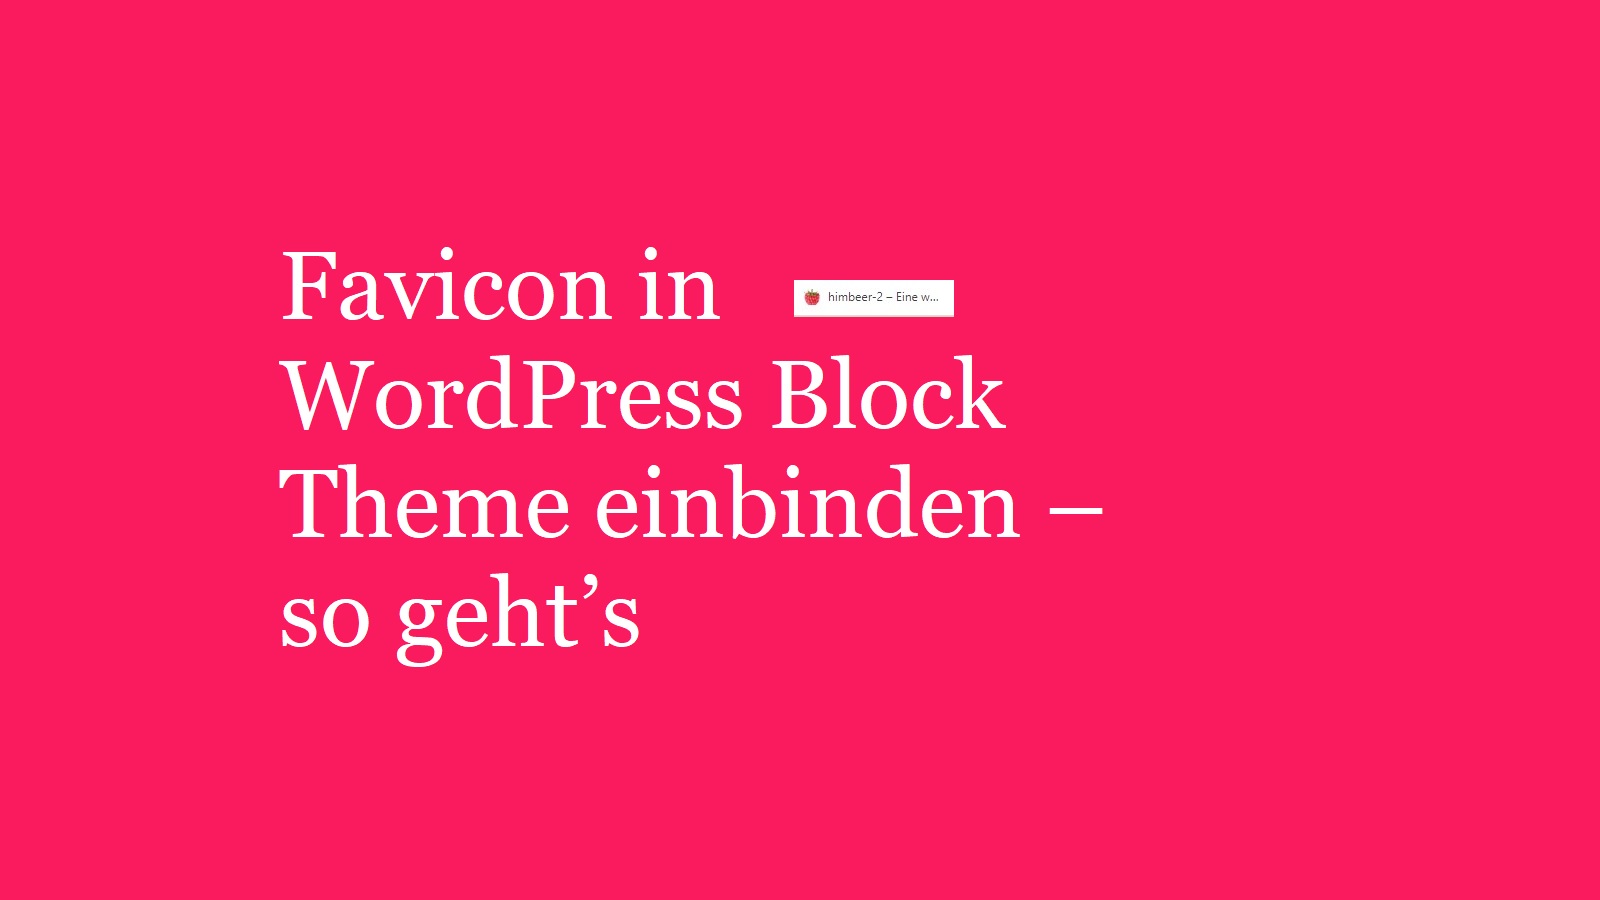 Favicon in WordPress Block Theme einbinden – so geht’s